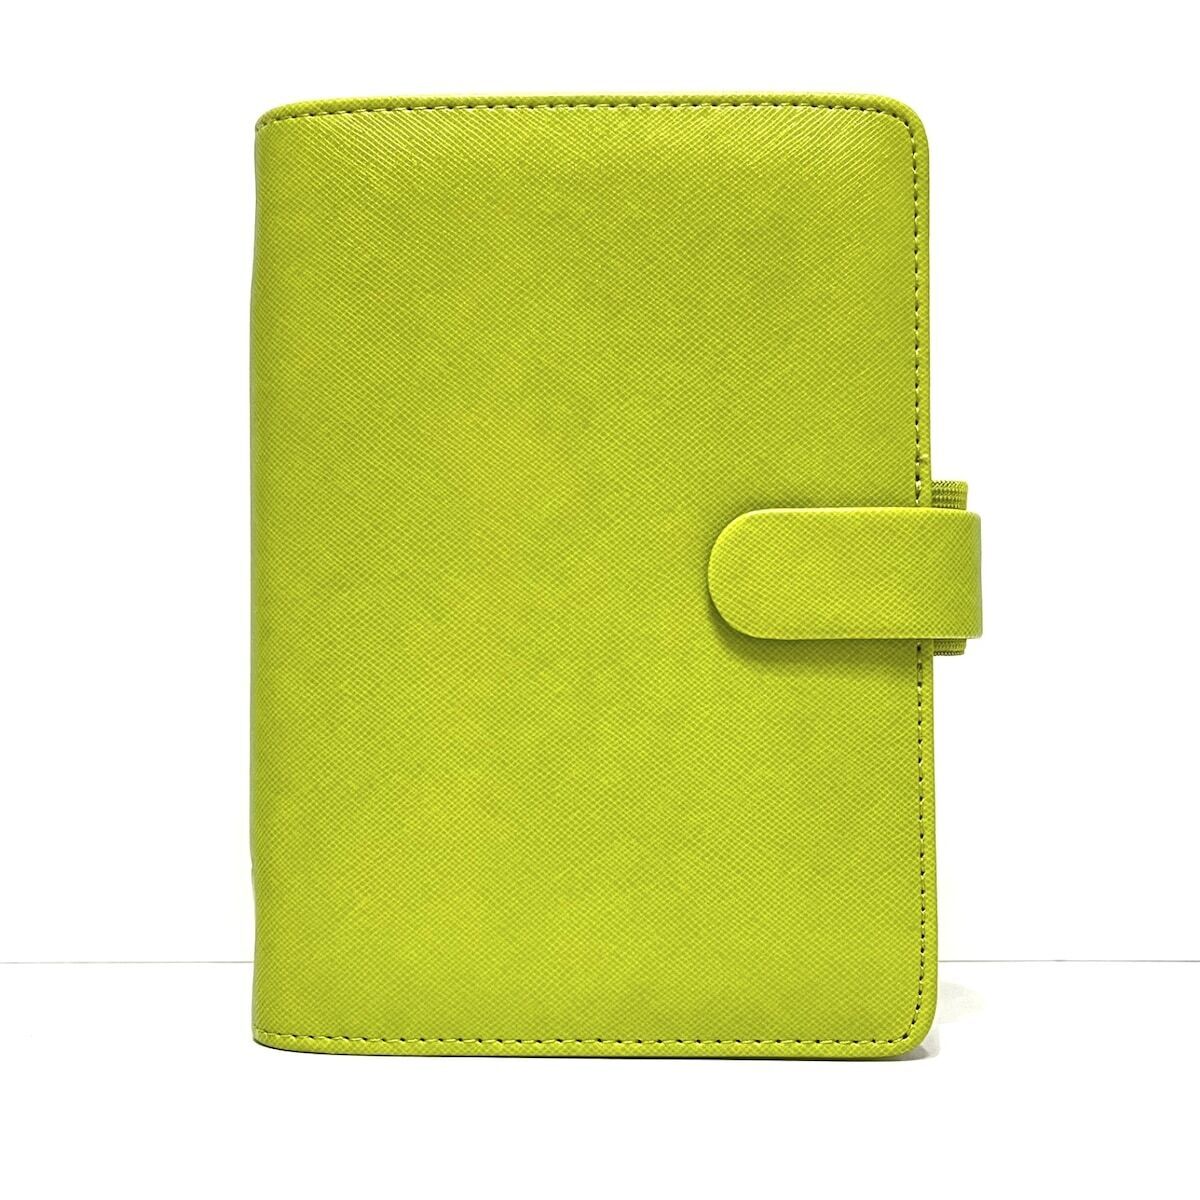 Auth Filofax - Yellow Green Leather Agenda